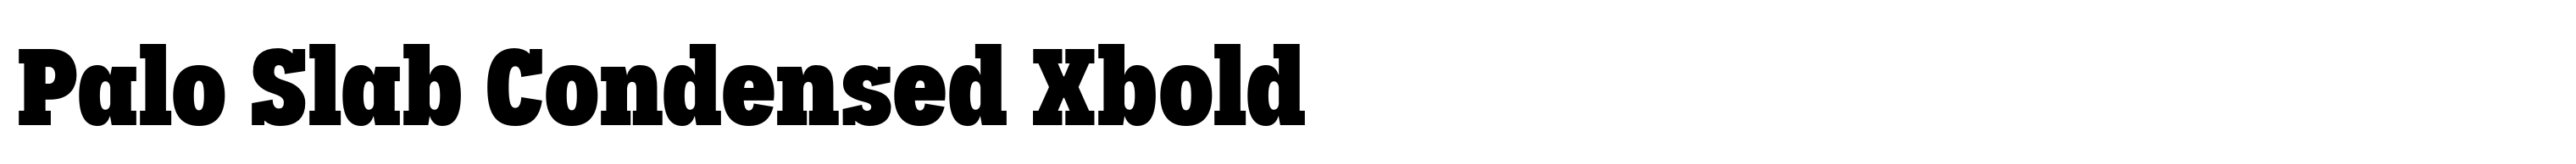 Palo Slab Condensed Xbold